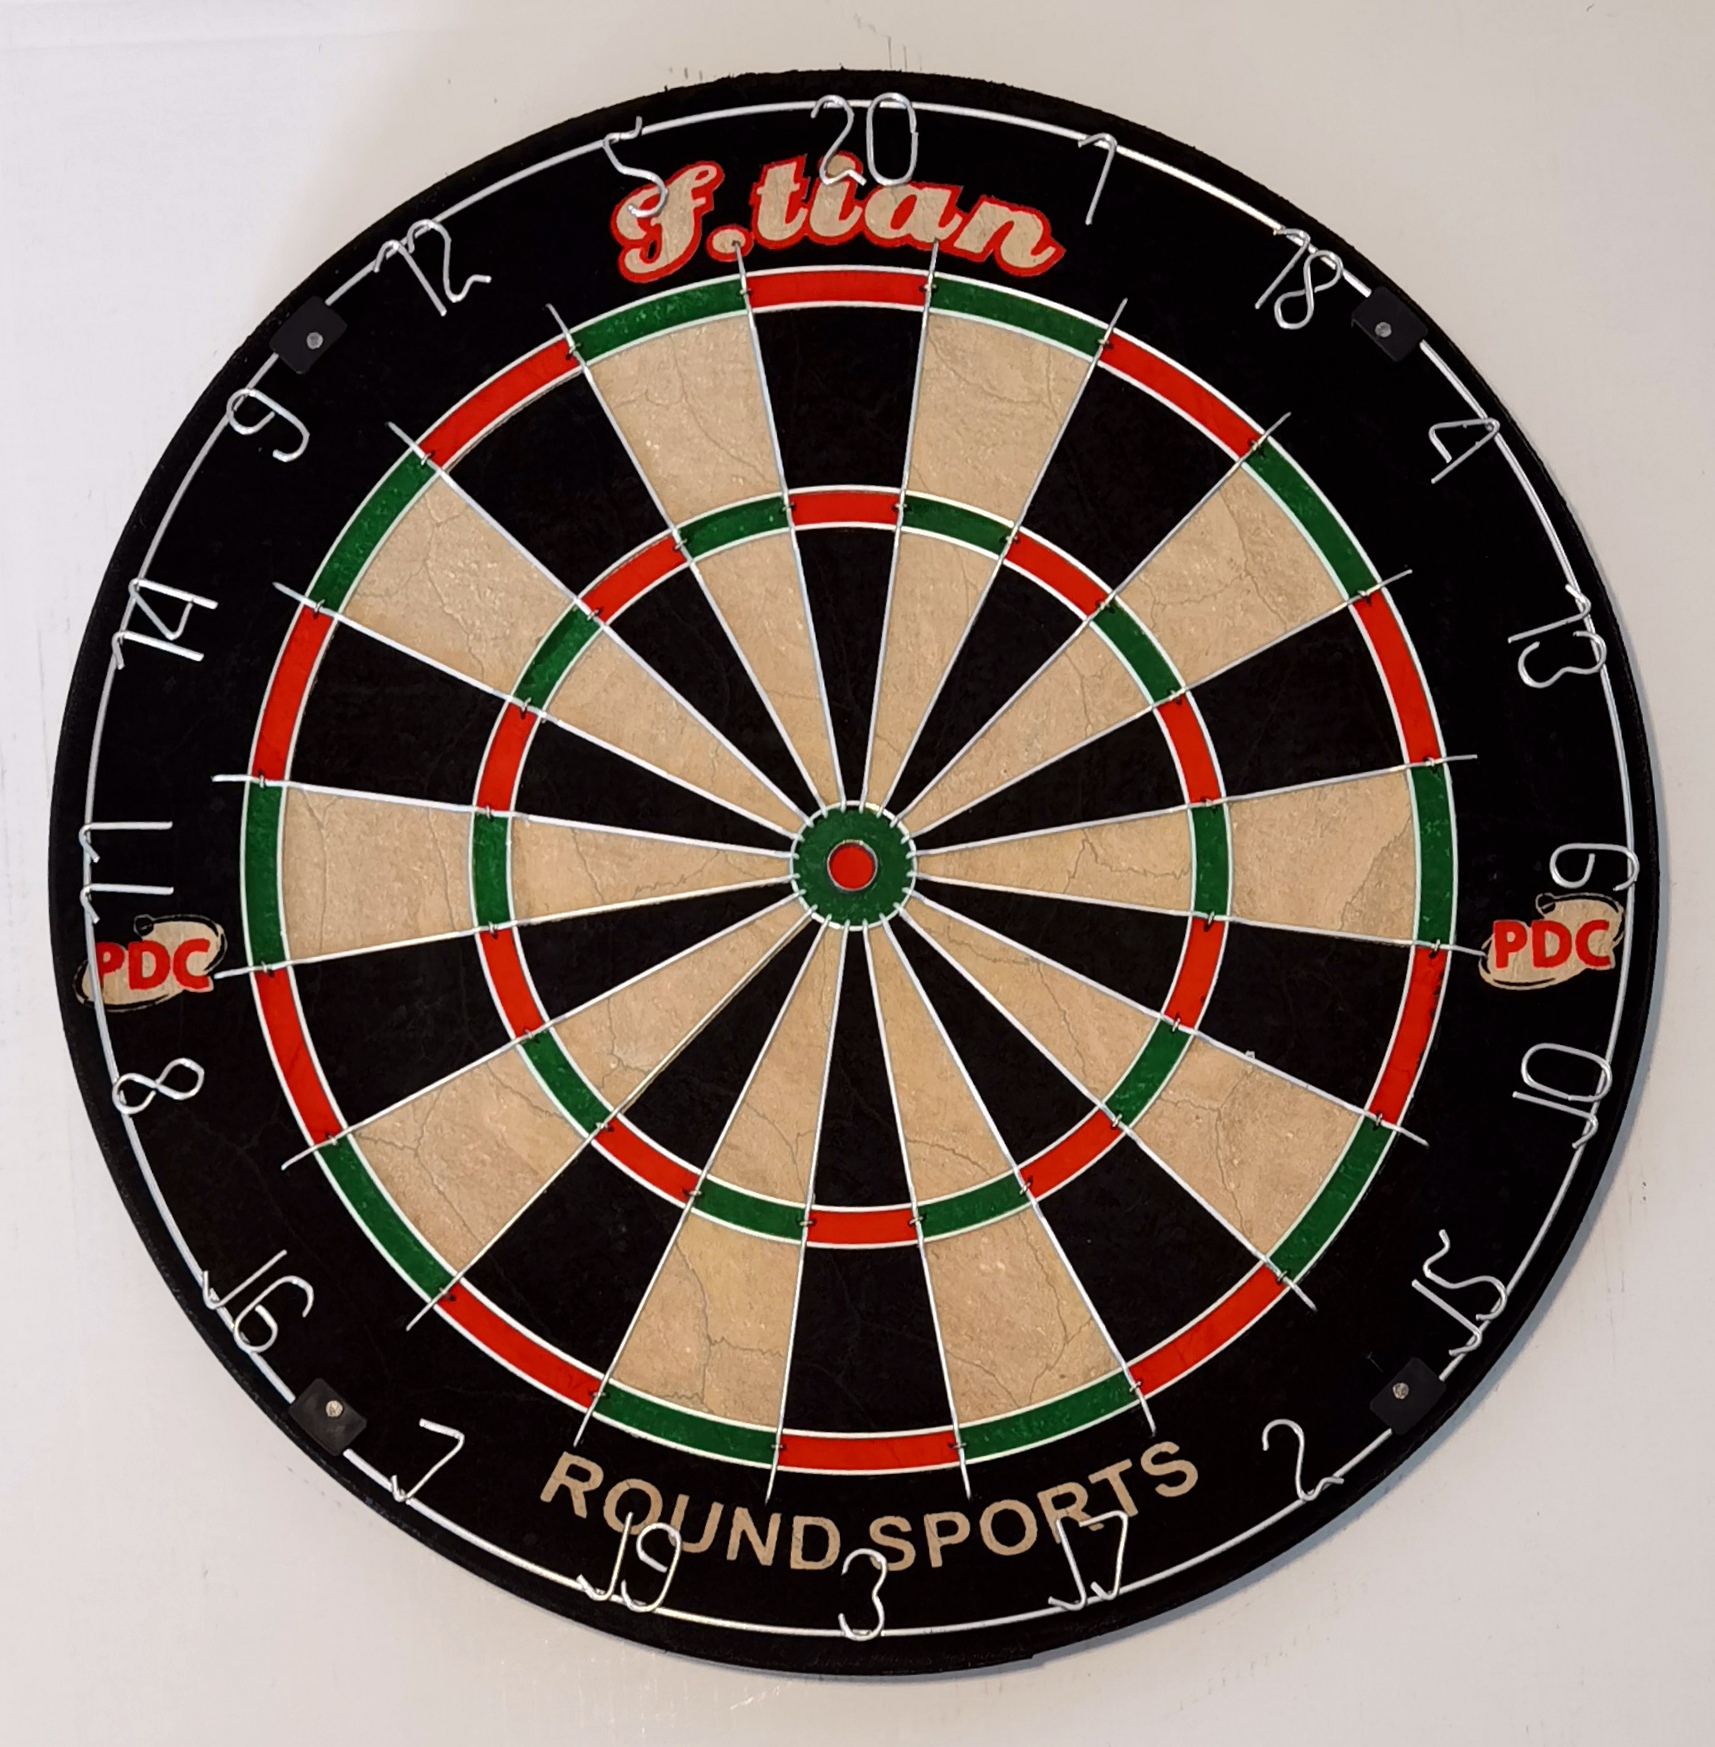 FIBRE-4 kwaliteit & goedkeap Round wire dartboard